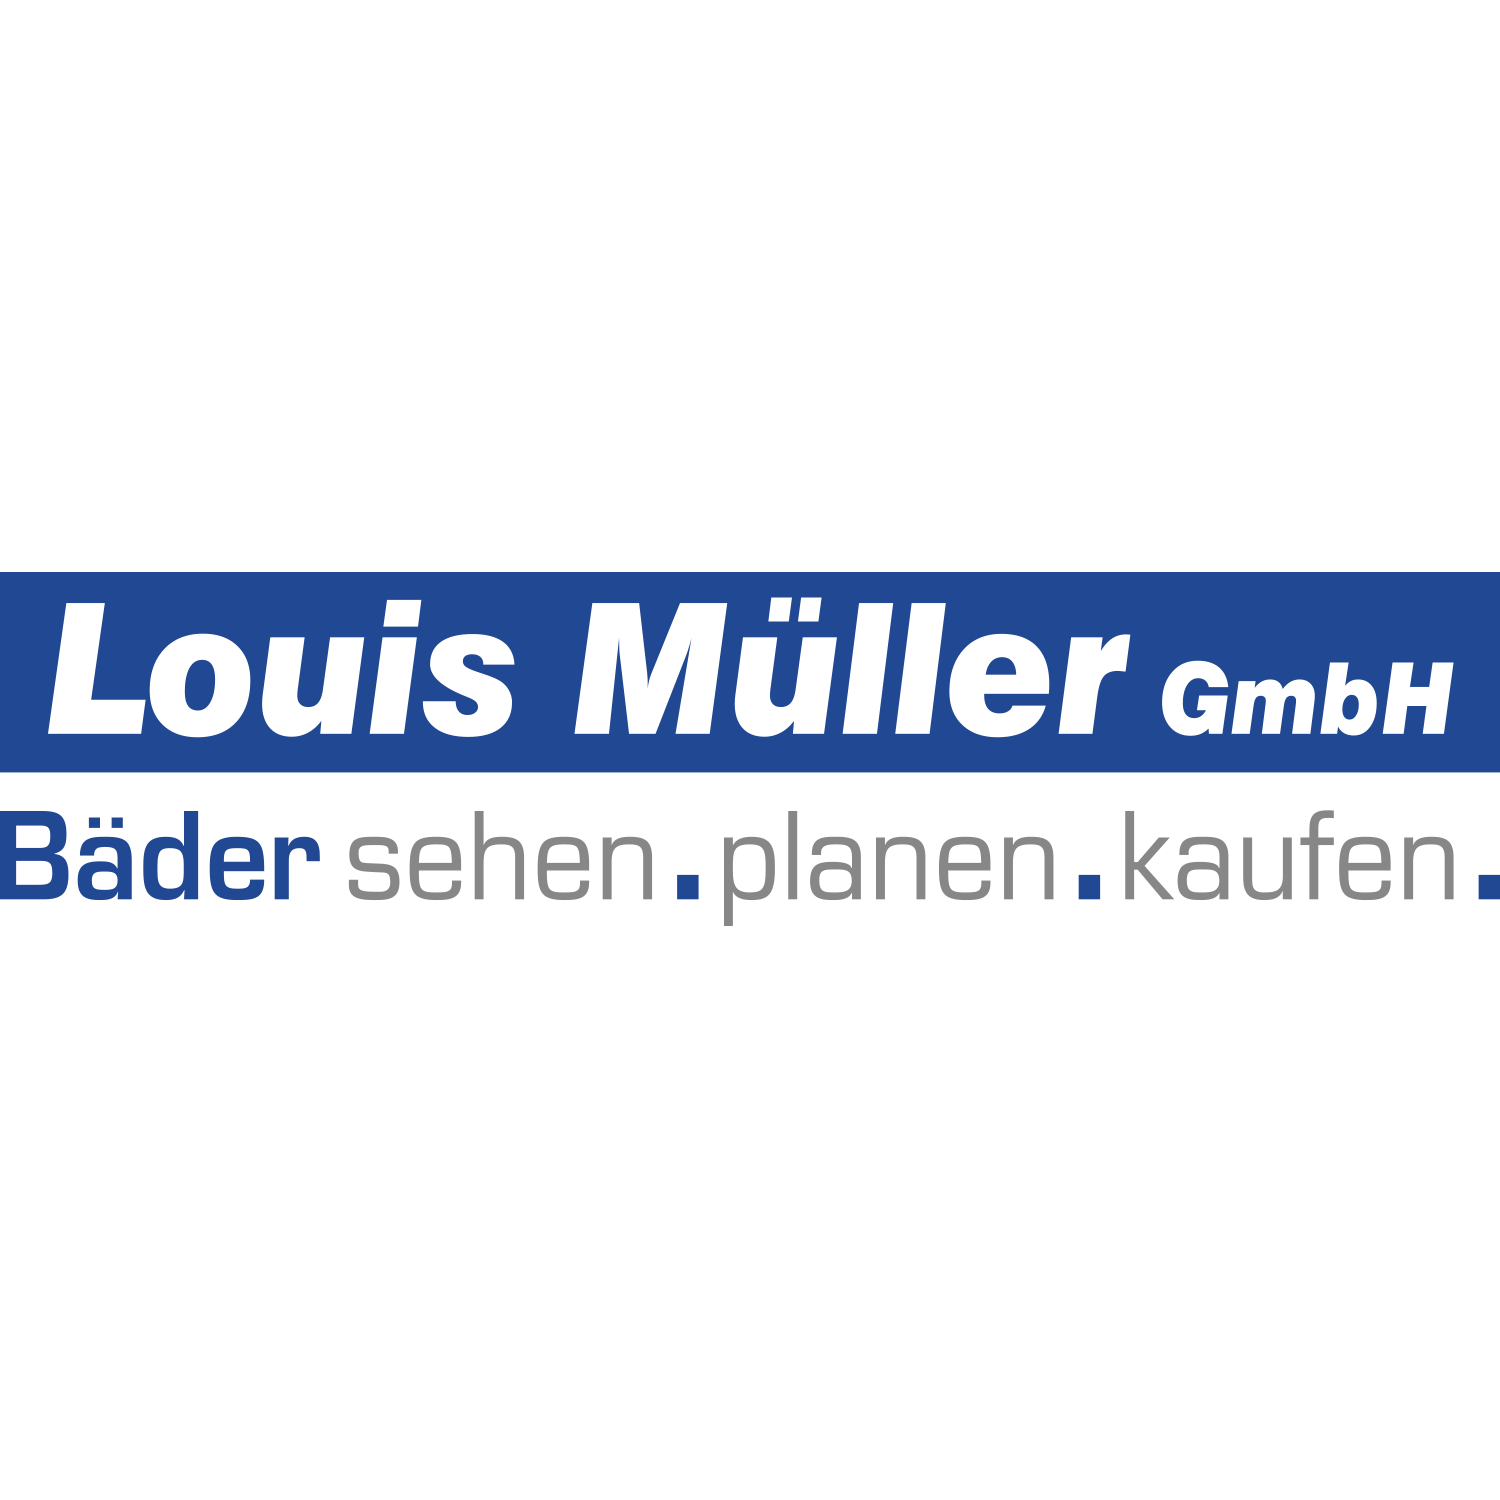 Louis Müller GmbH Logo